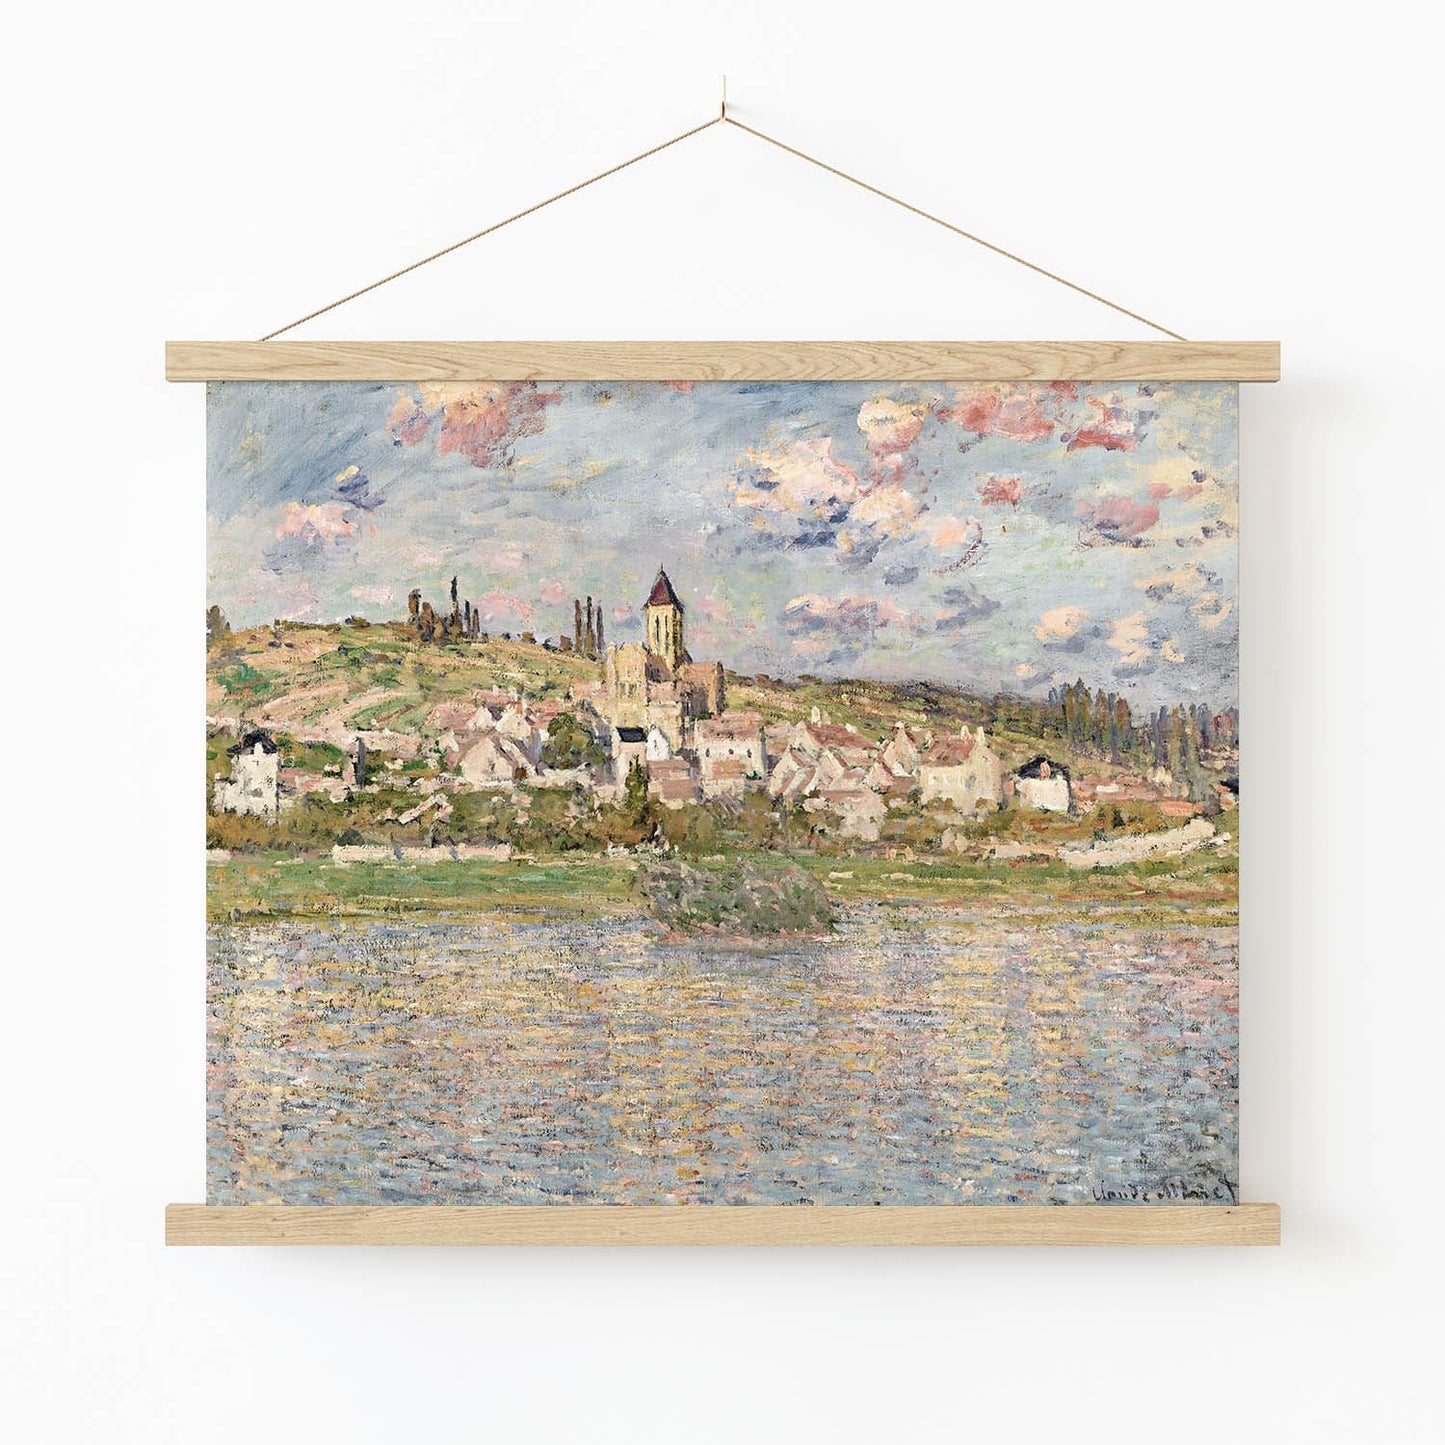 Seine River Art Print in Wood Hanger Frame on Wall